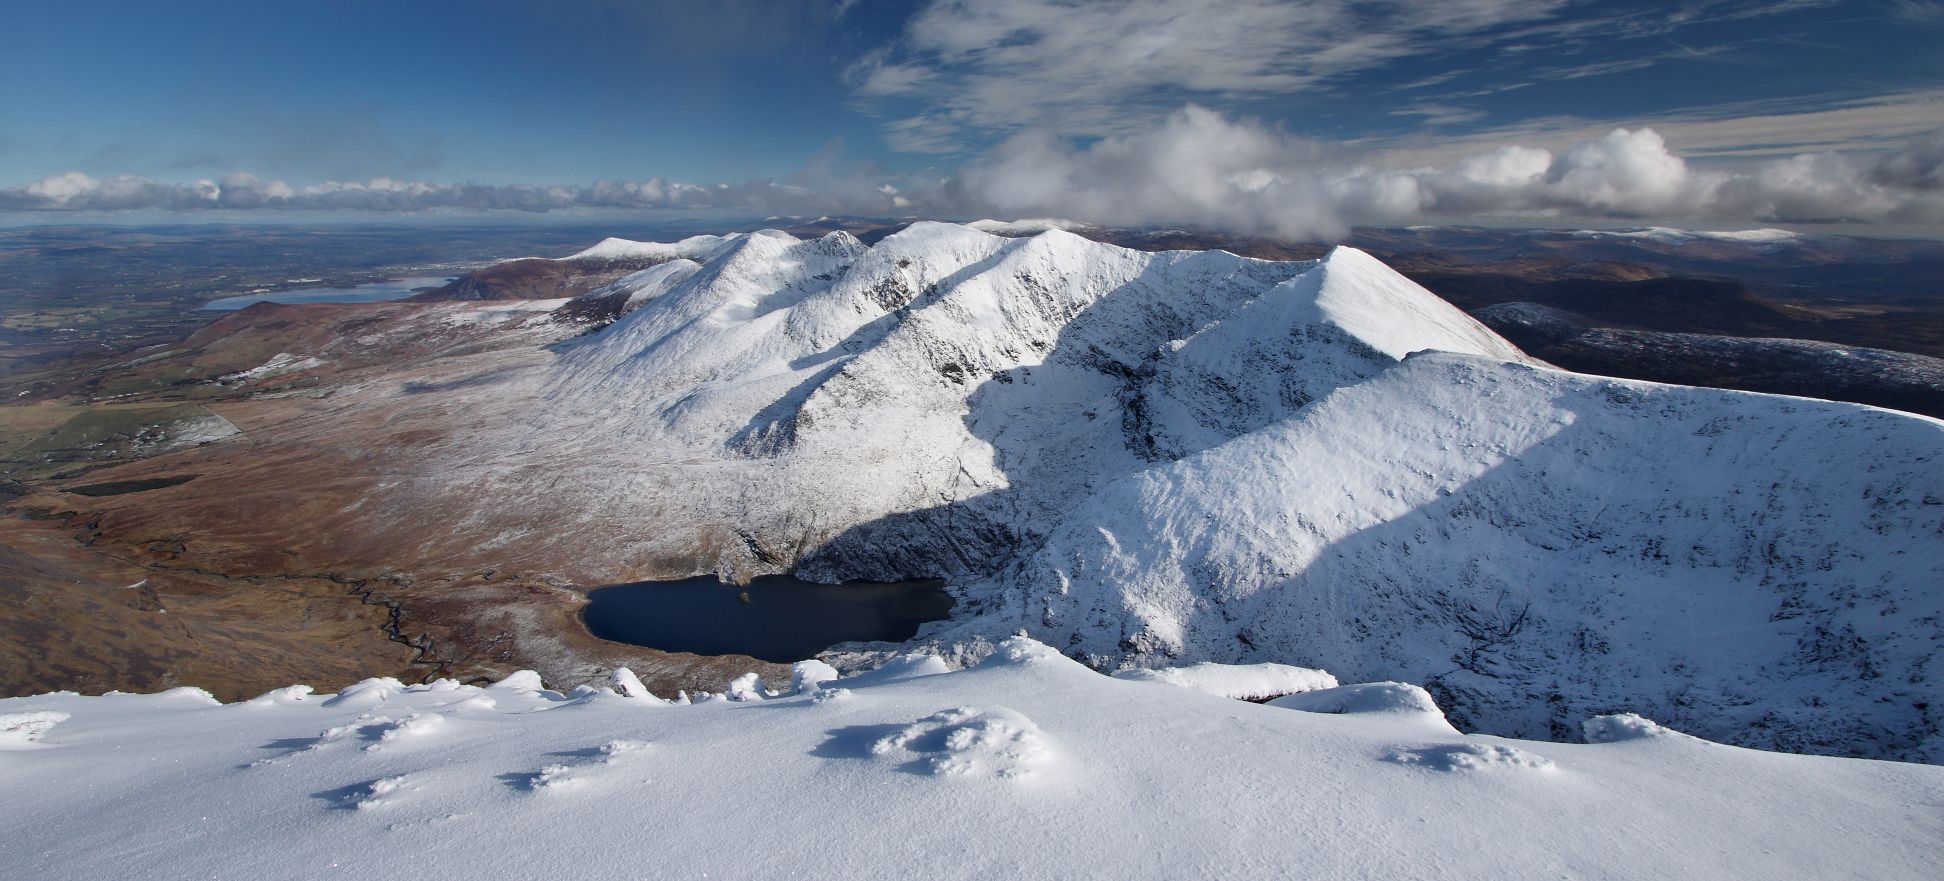 the summit of Carrauntoohil, in winter